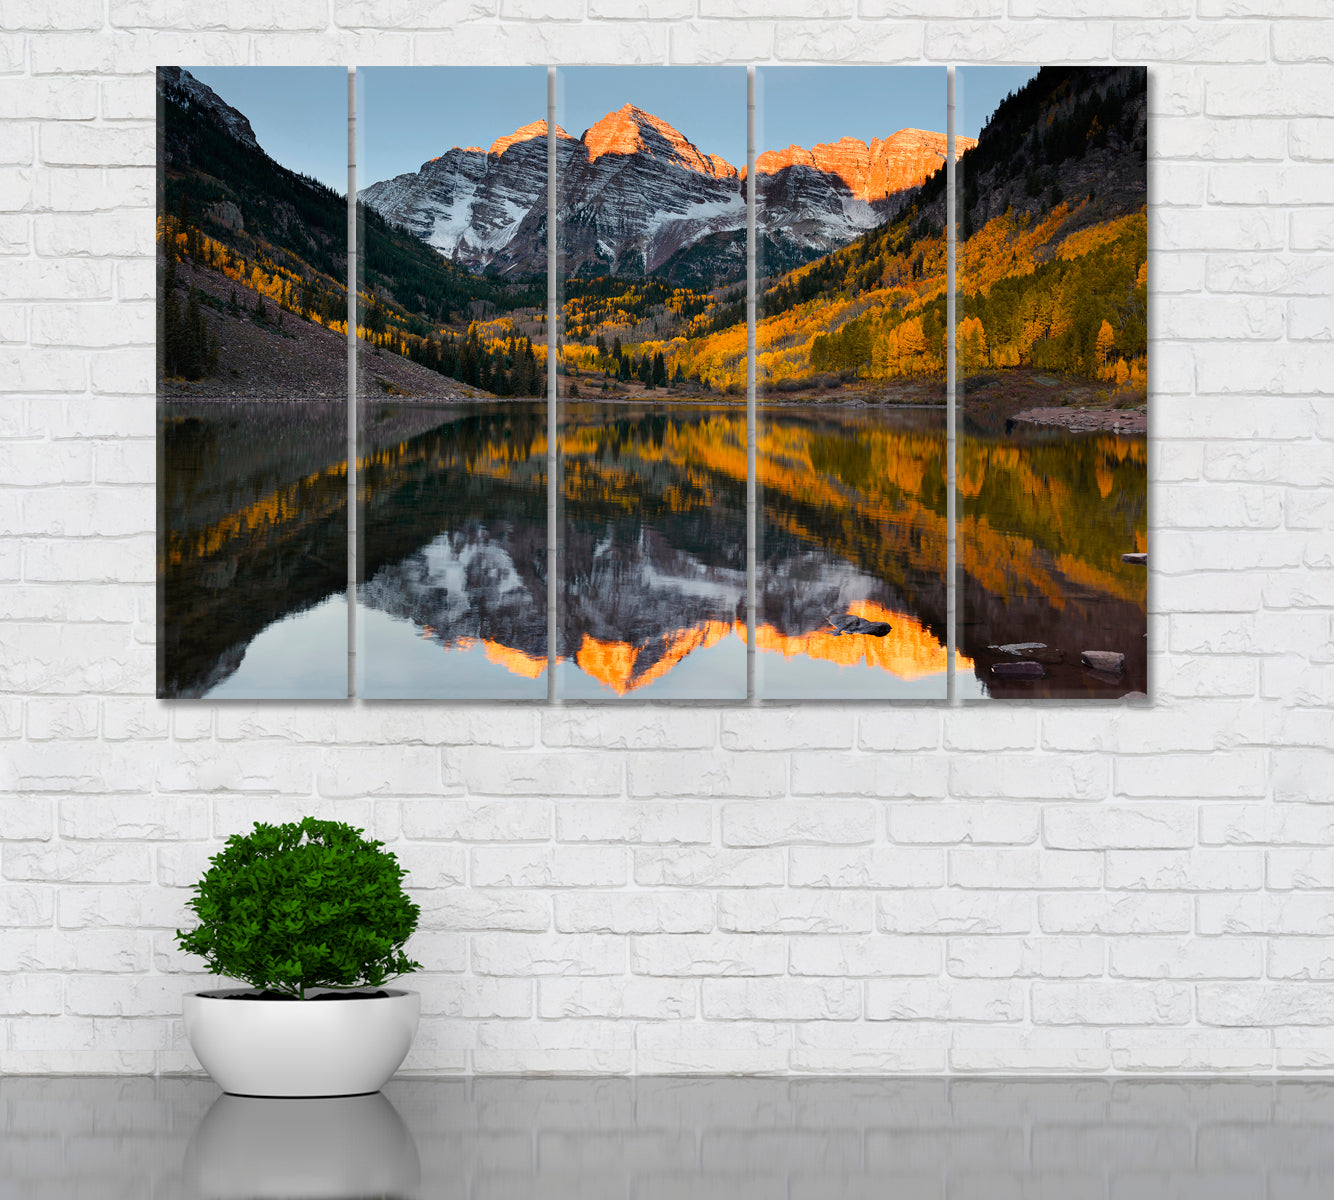 Beautiful Maroon Bells Peak and Maroon Lake in Autumn Aspen Colorado Canvas Print ArtLexy 5 Panels 36"x24" inches 